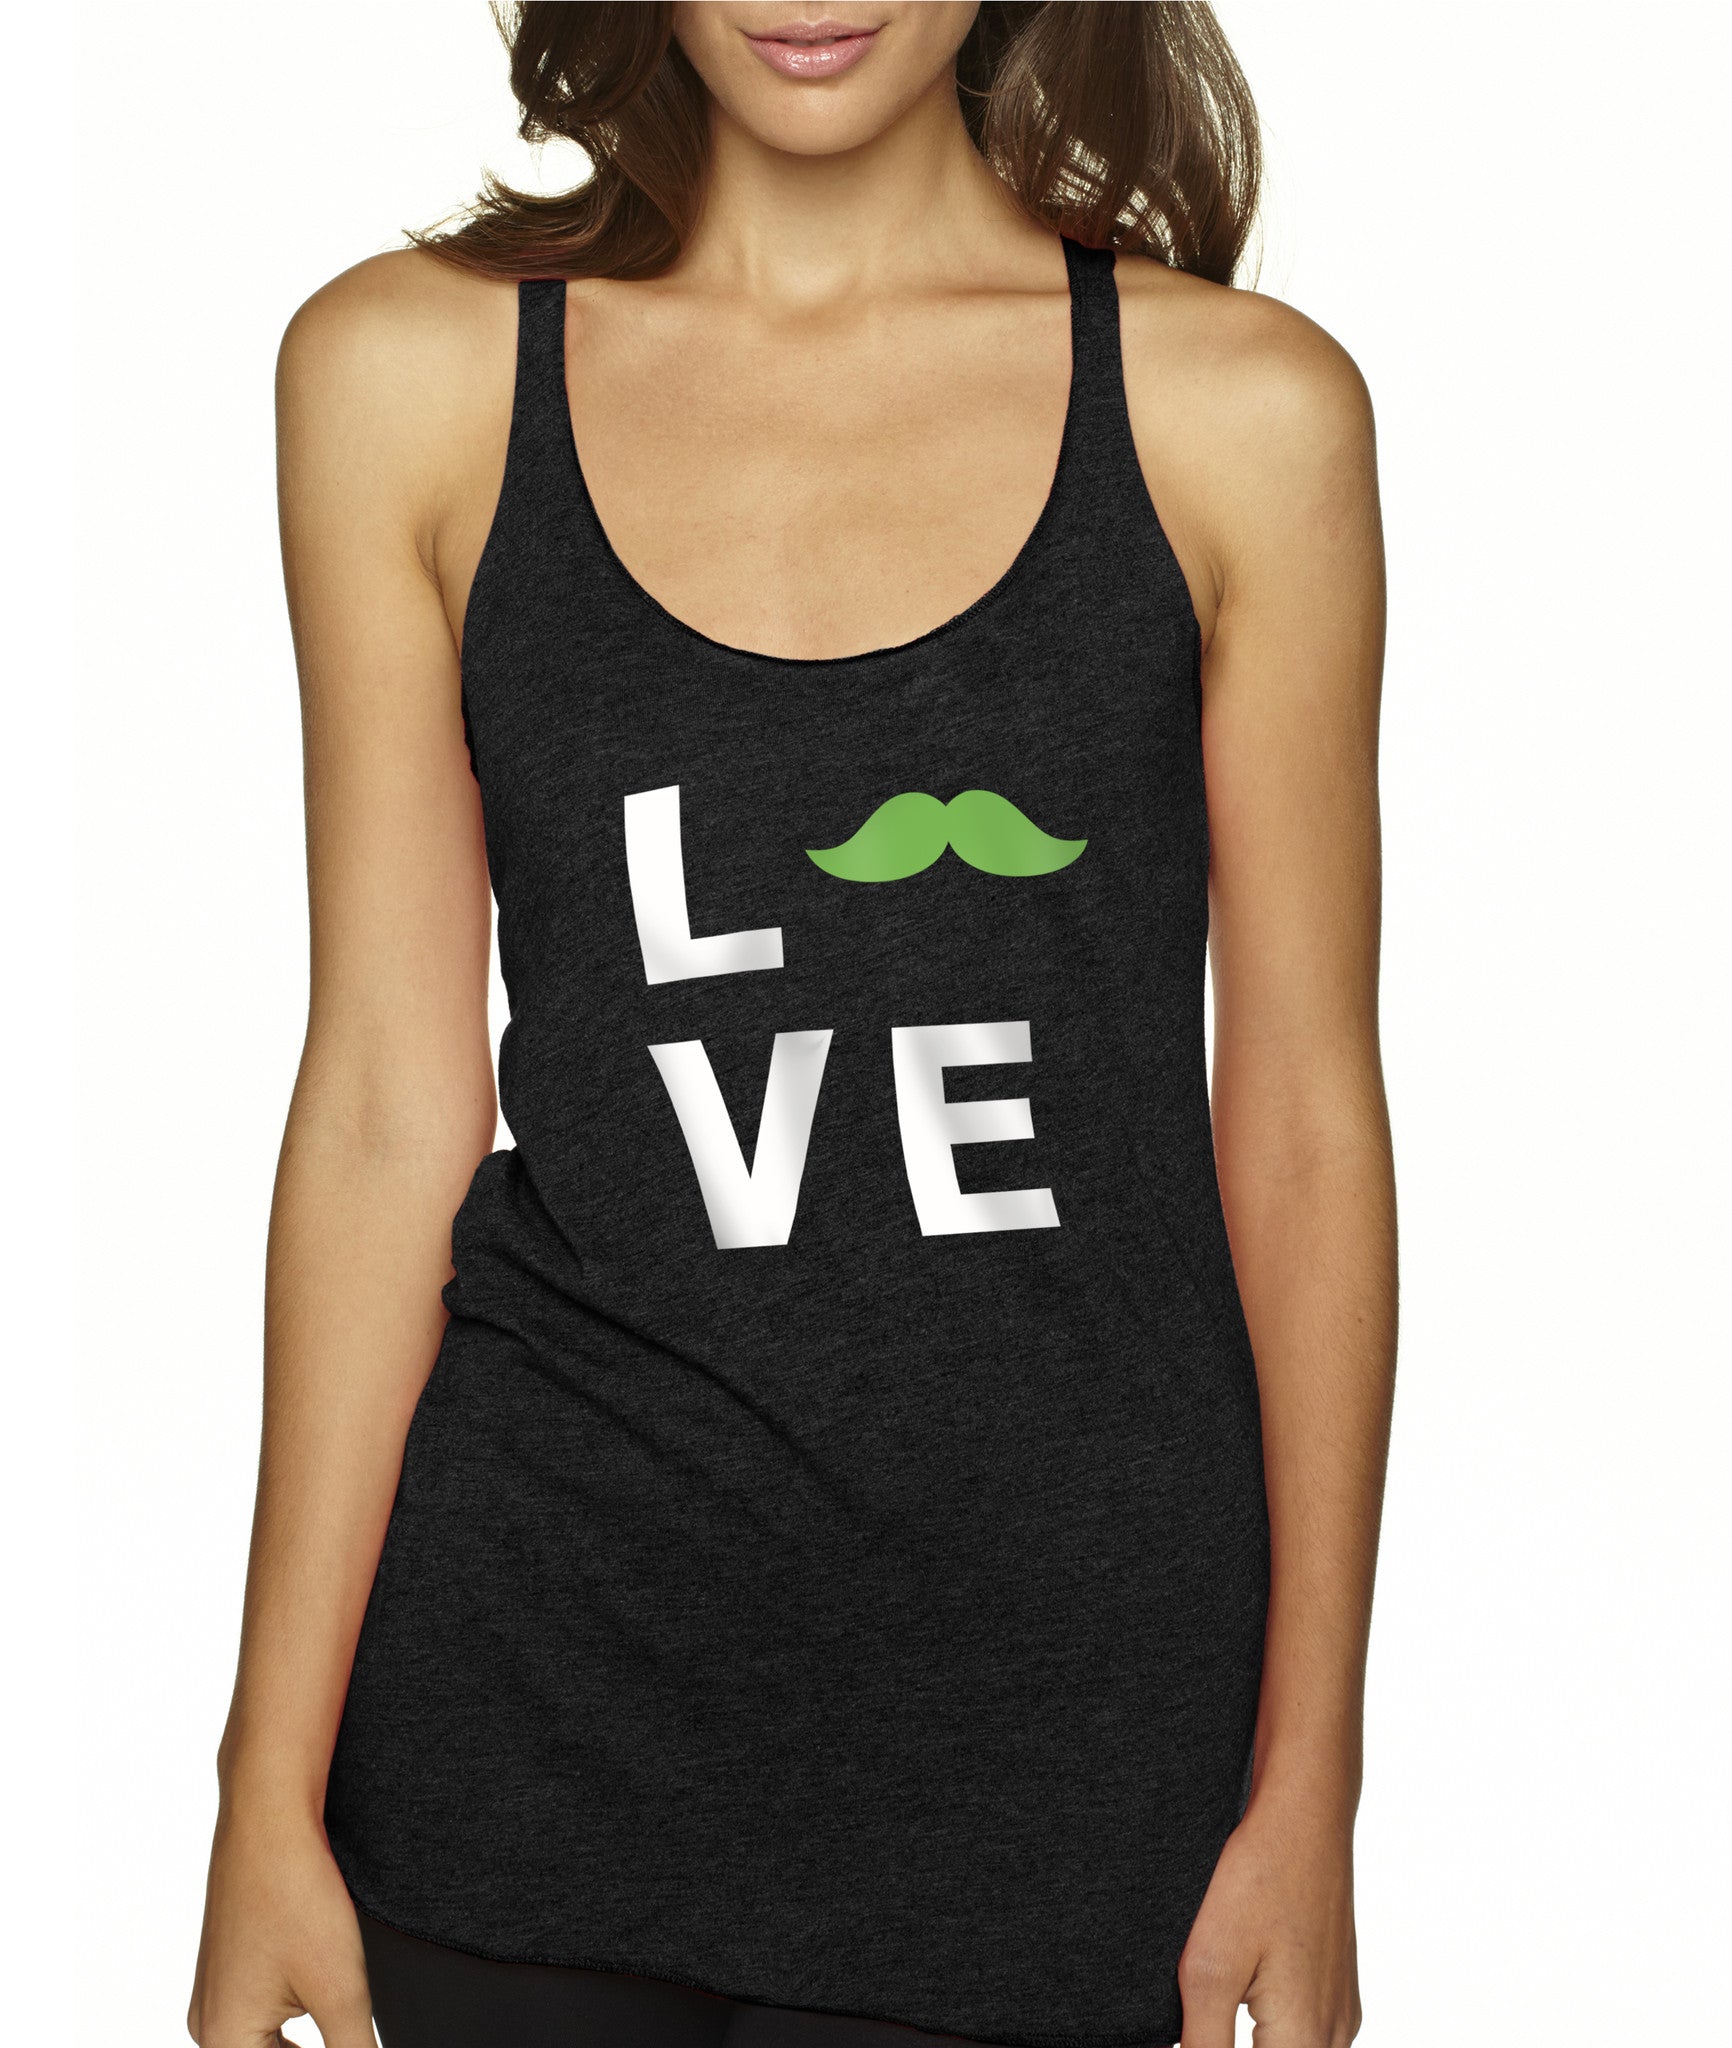 "Love" Tank, Apparel, Green Mustache, Mustache Munchies, healthy organic vegan gluten-free snack crackers